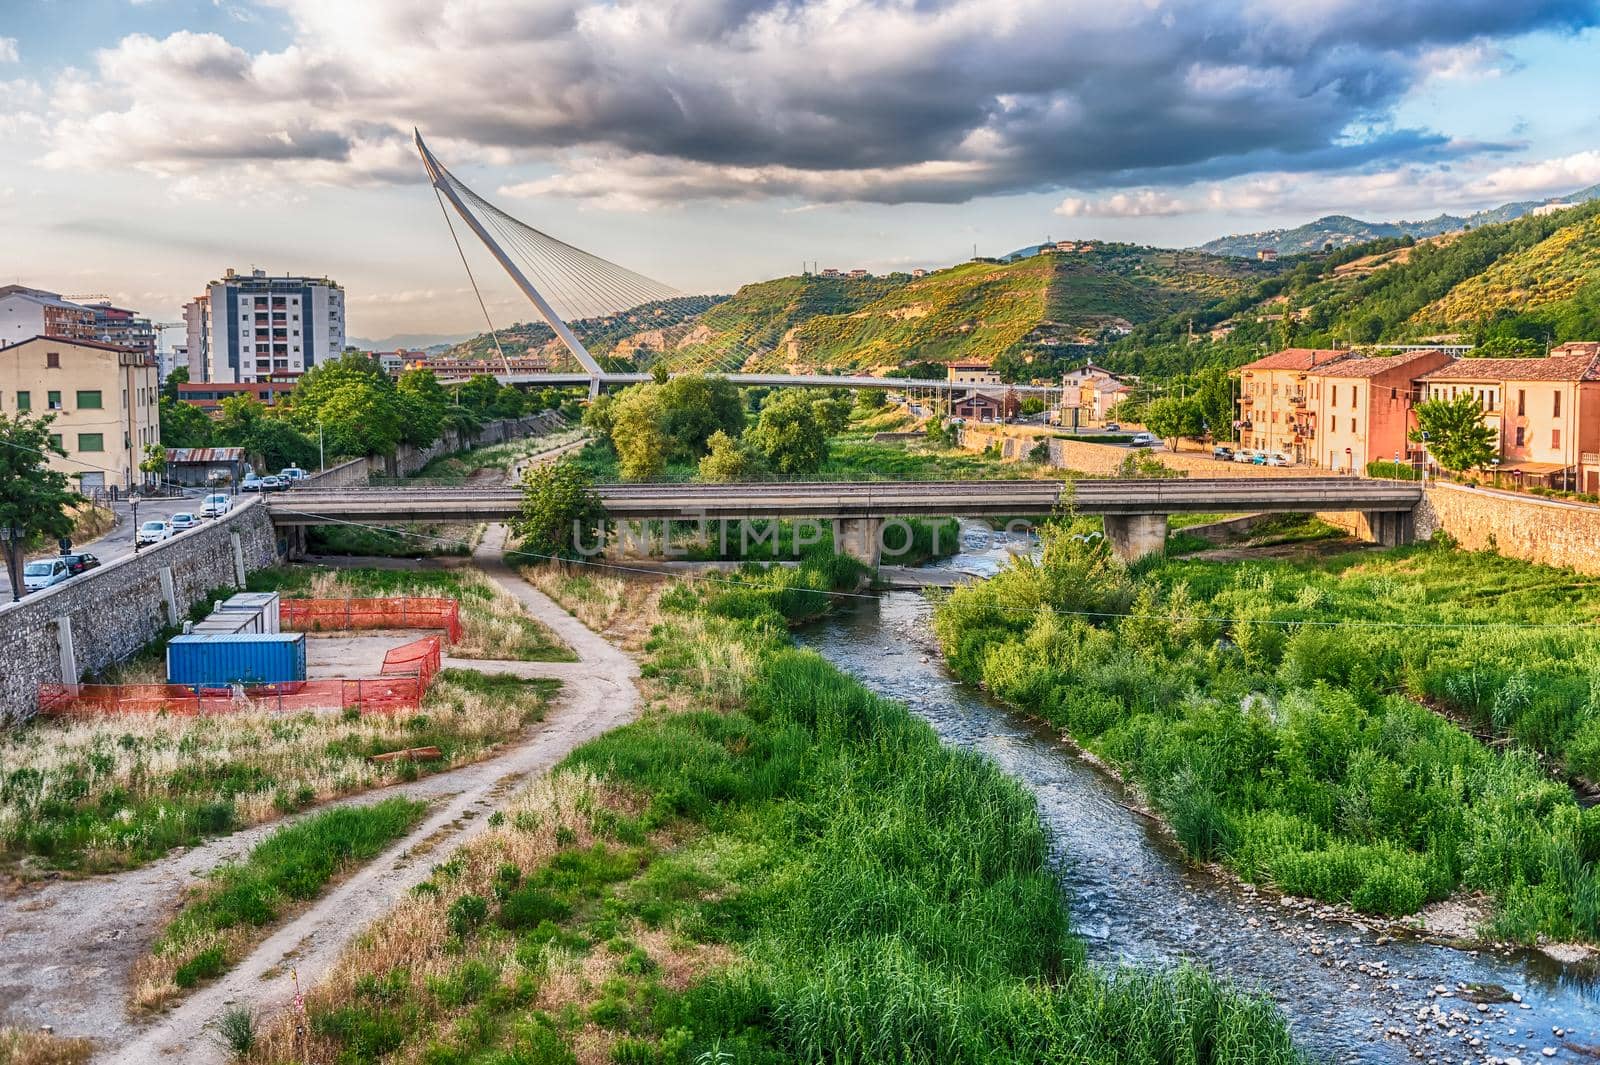 View over the Crathis river and Calatrava's Bridge, Cosenza, Italy by marcorubino